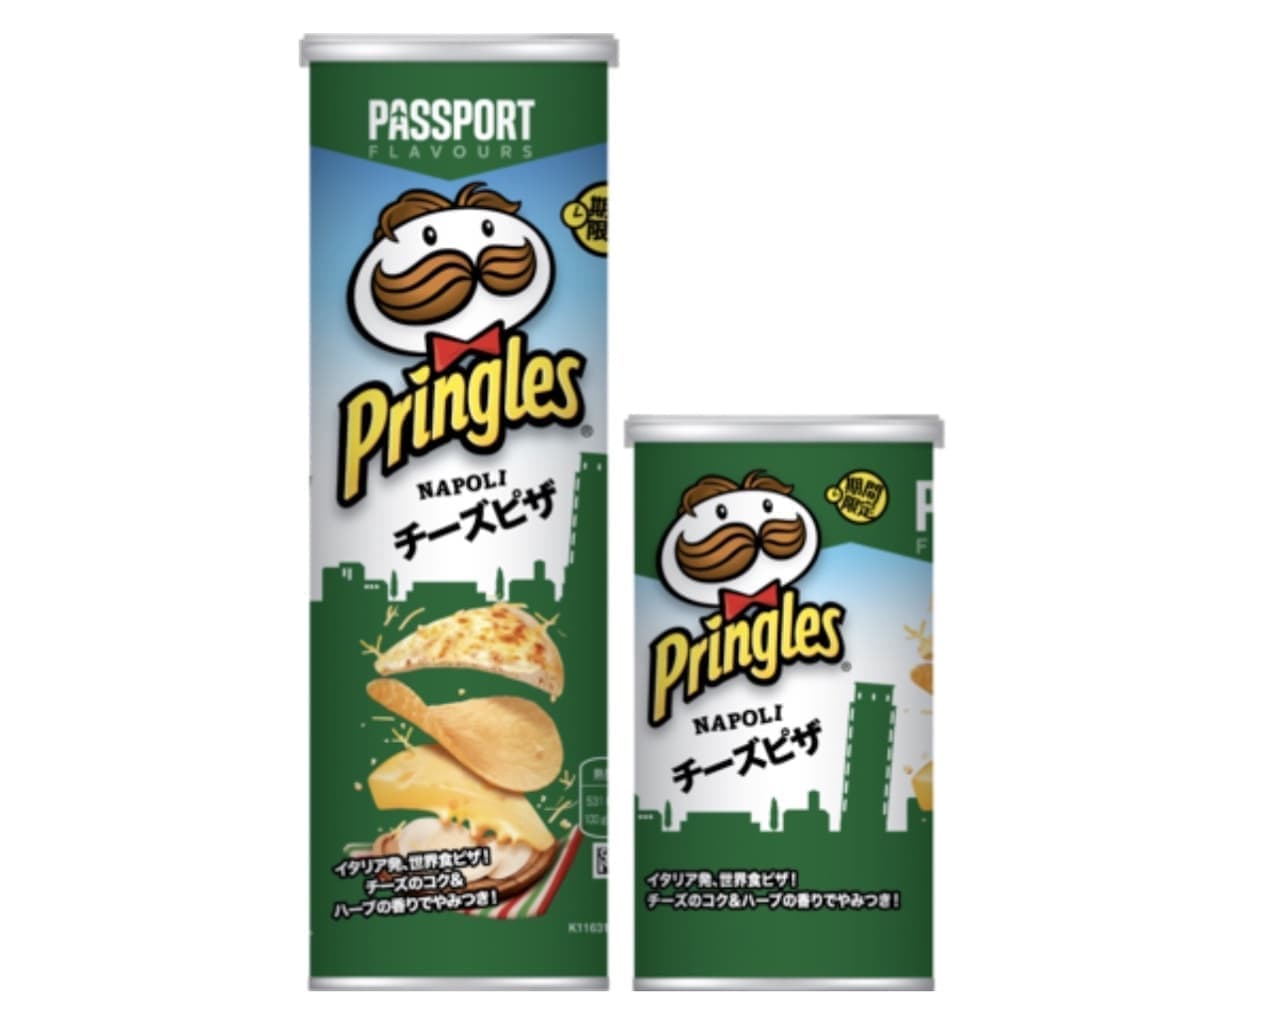 New product "Pringles NAPOLI Cheese Pizza"